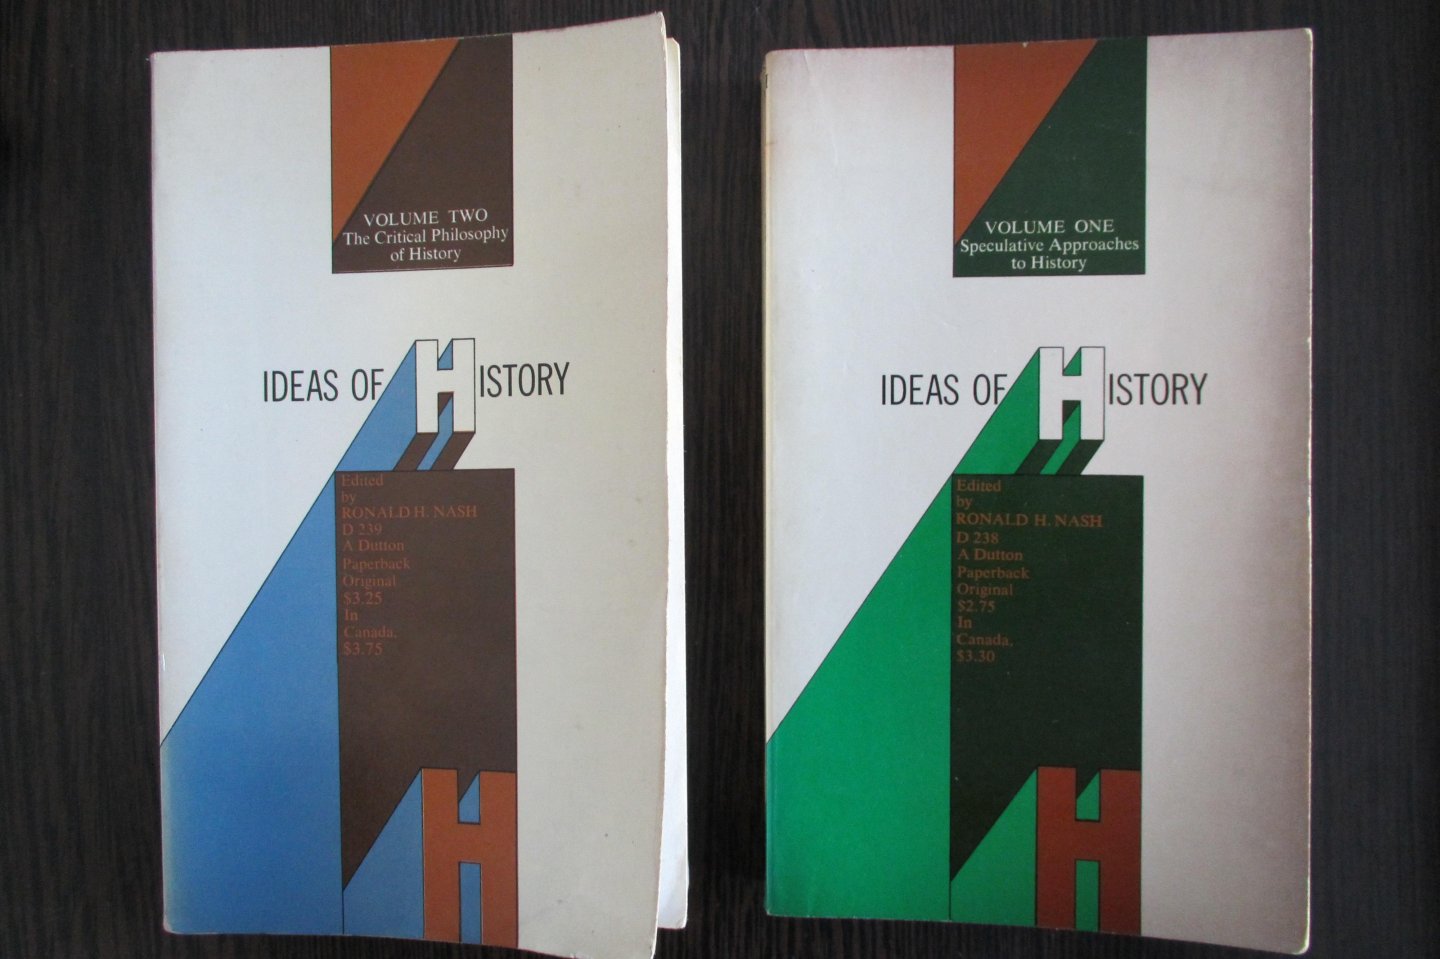 Ronald H. Nash - Ideas of History deel 1 en 2  - Speculative approaches to History  (deel 1) en The critical Philosophy of History (deel 2)